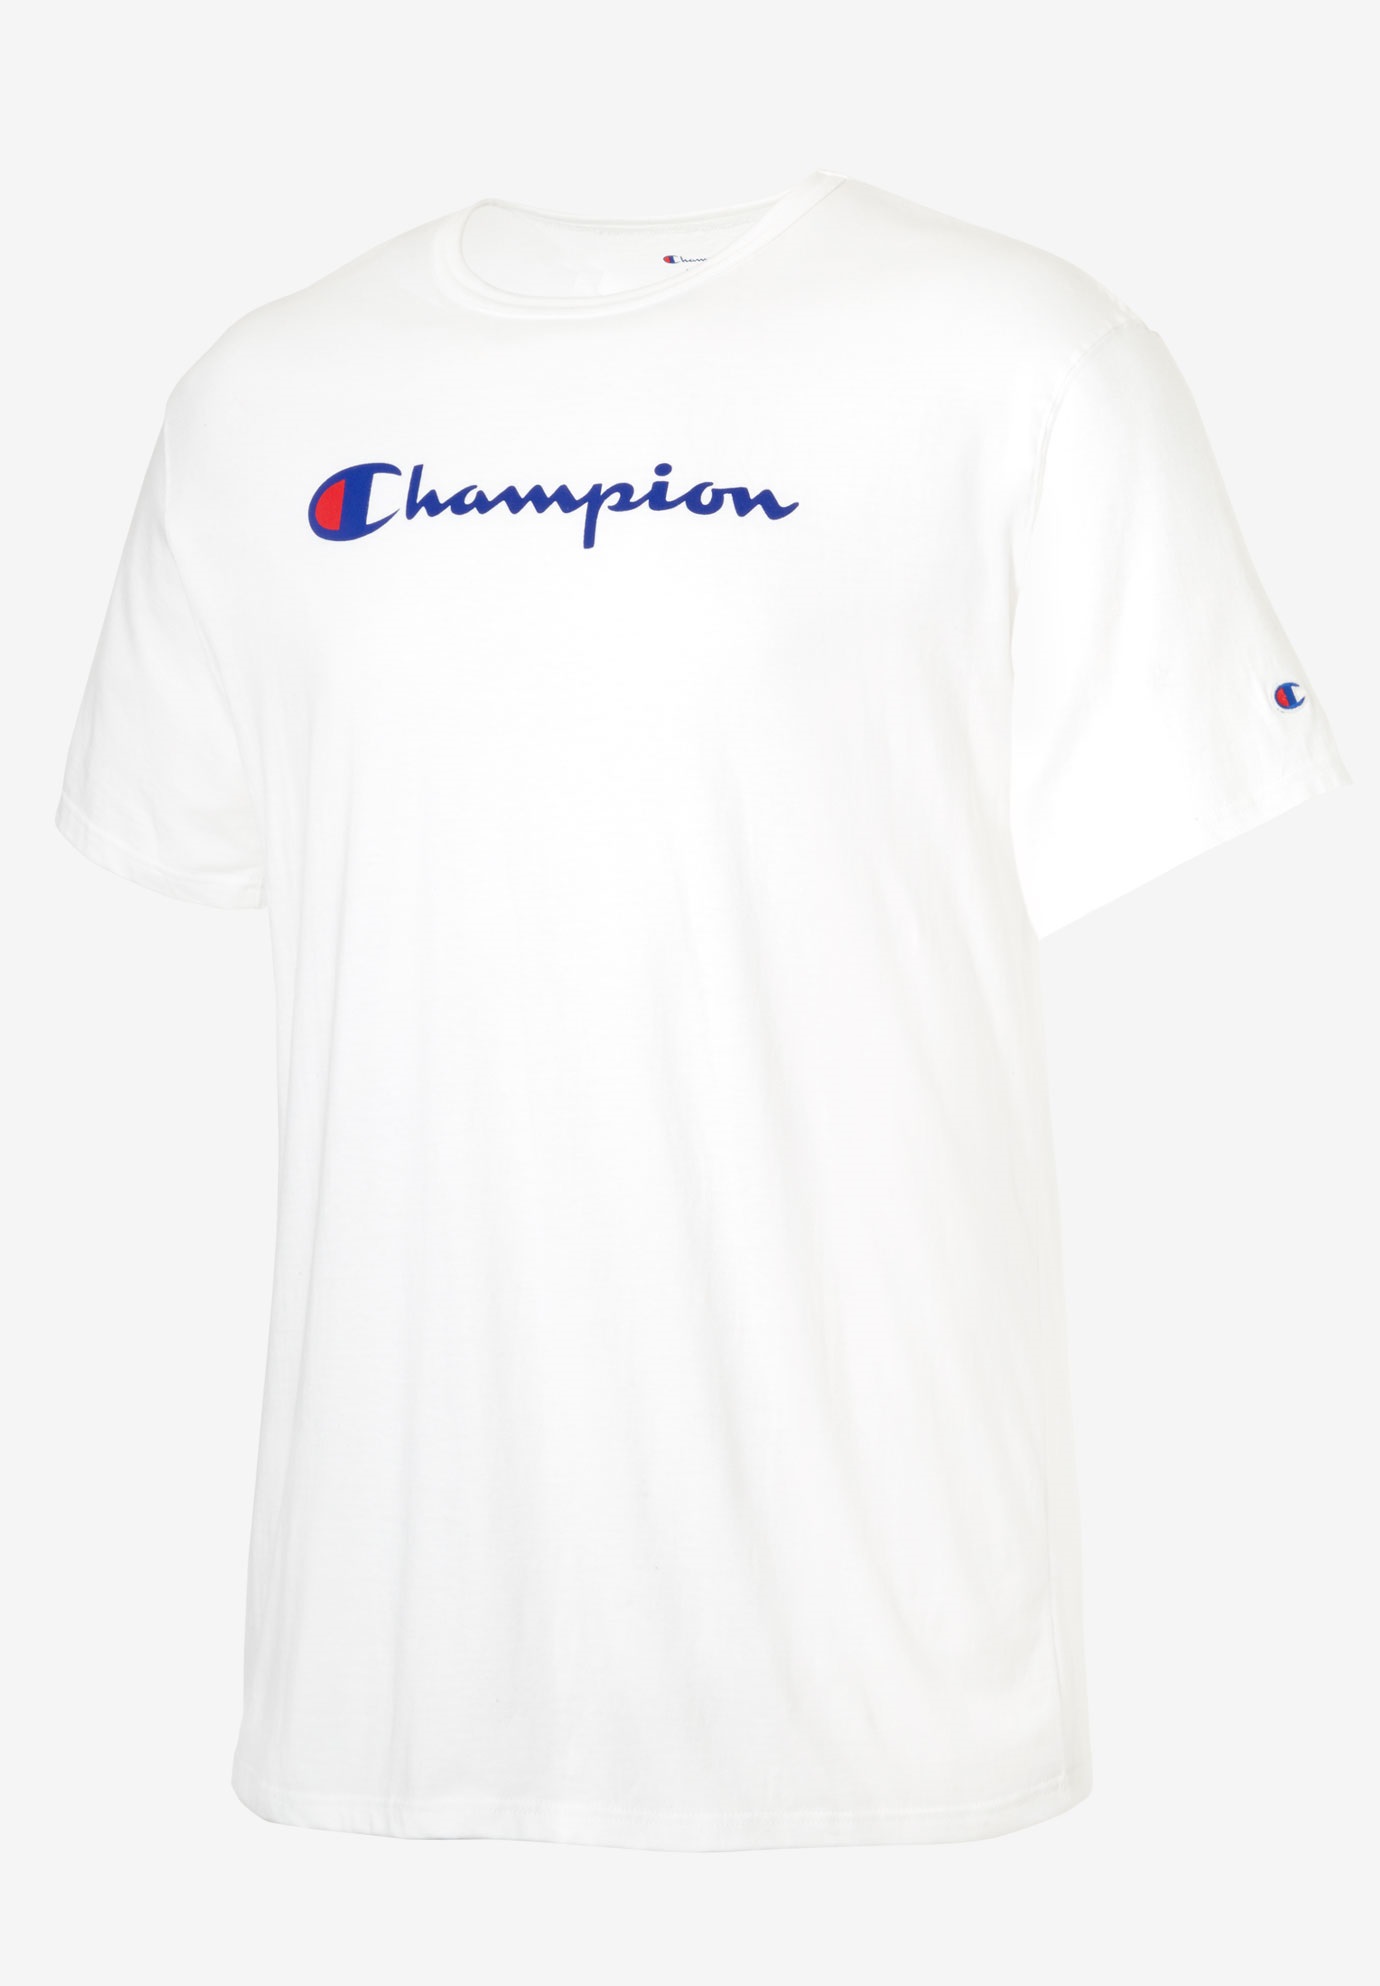 champion 3xlt shirts